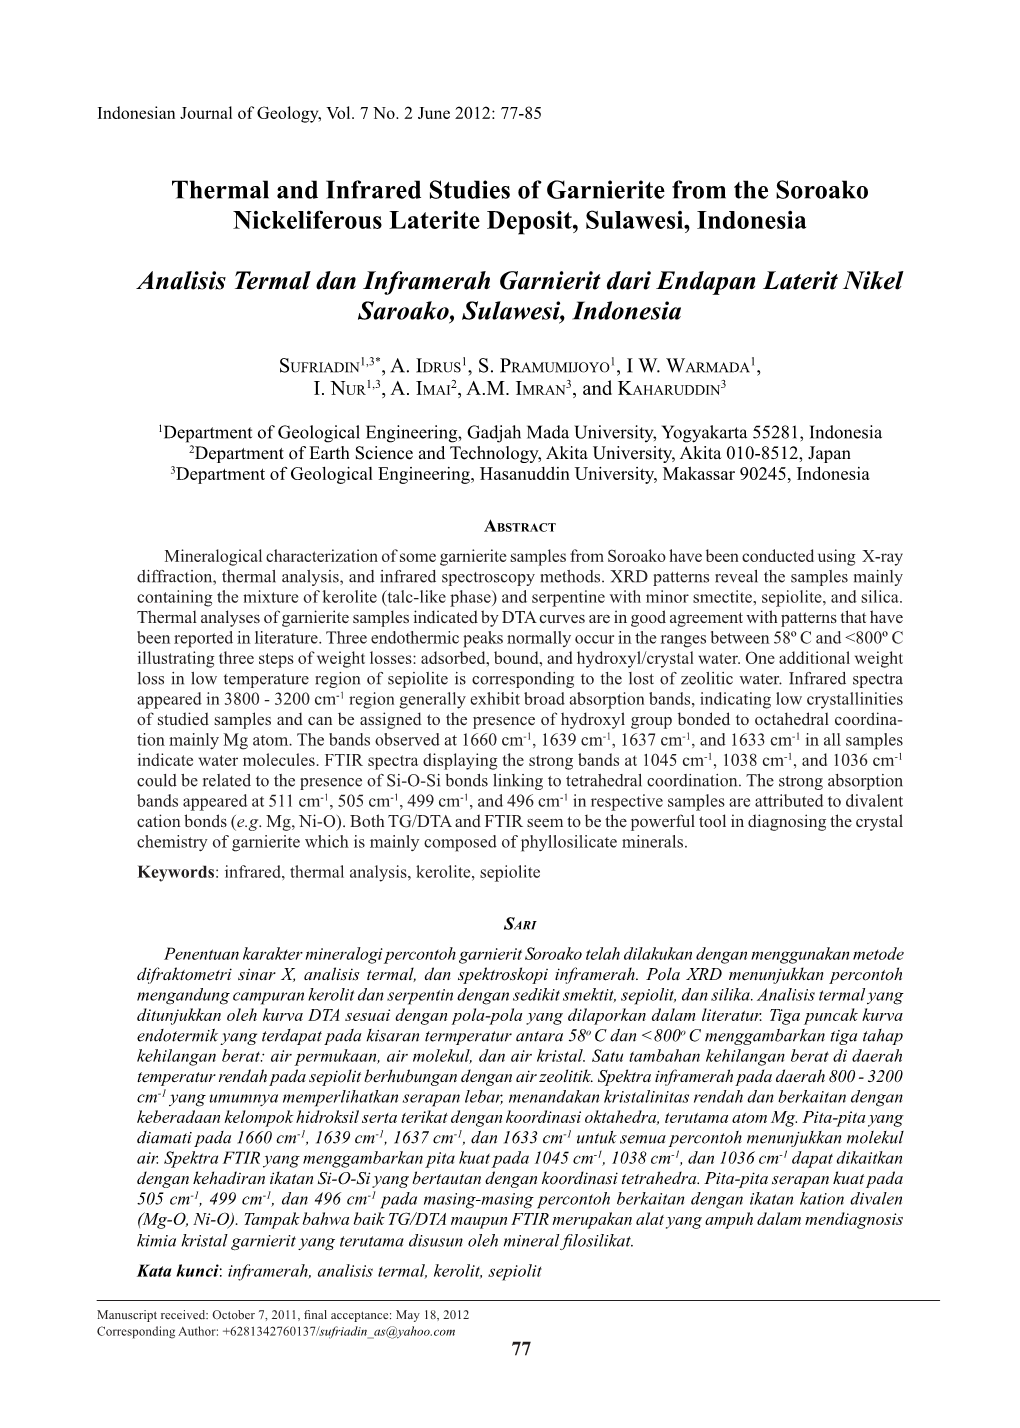 Thermal and Infrared Studies of Garnierite from the Soroako Nickeliferous Laterite Deposit, Sulawesi, Indonesia